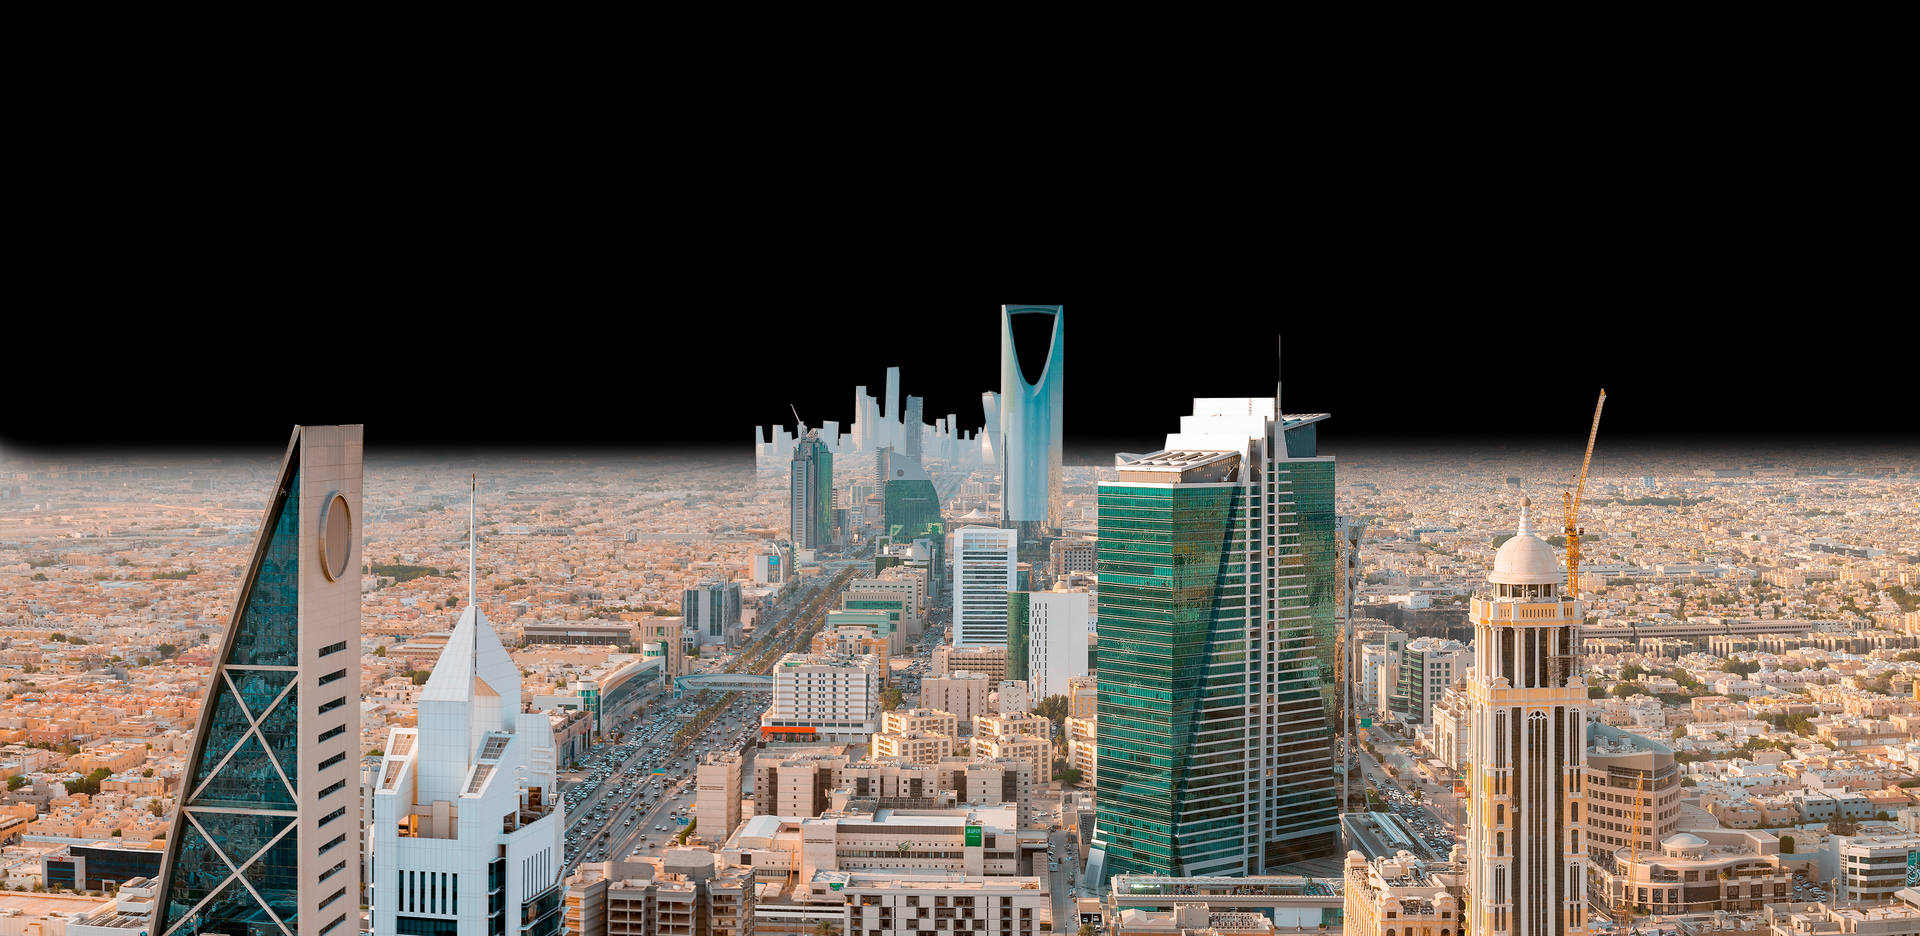 Majestic Skyscrapers Towering Over Riyadh